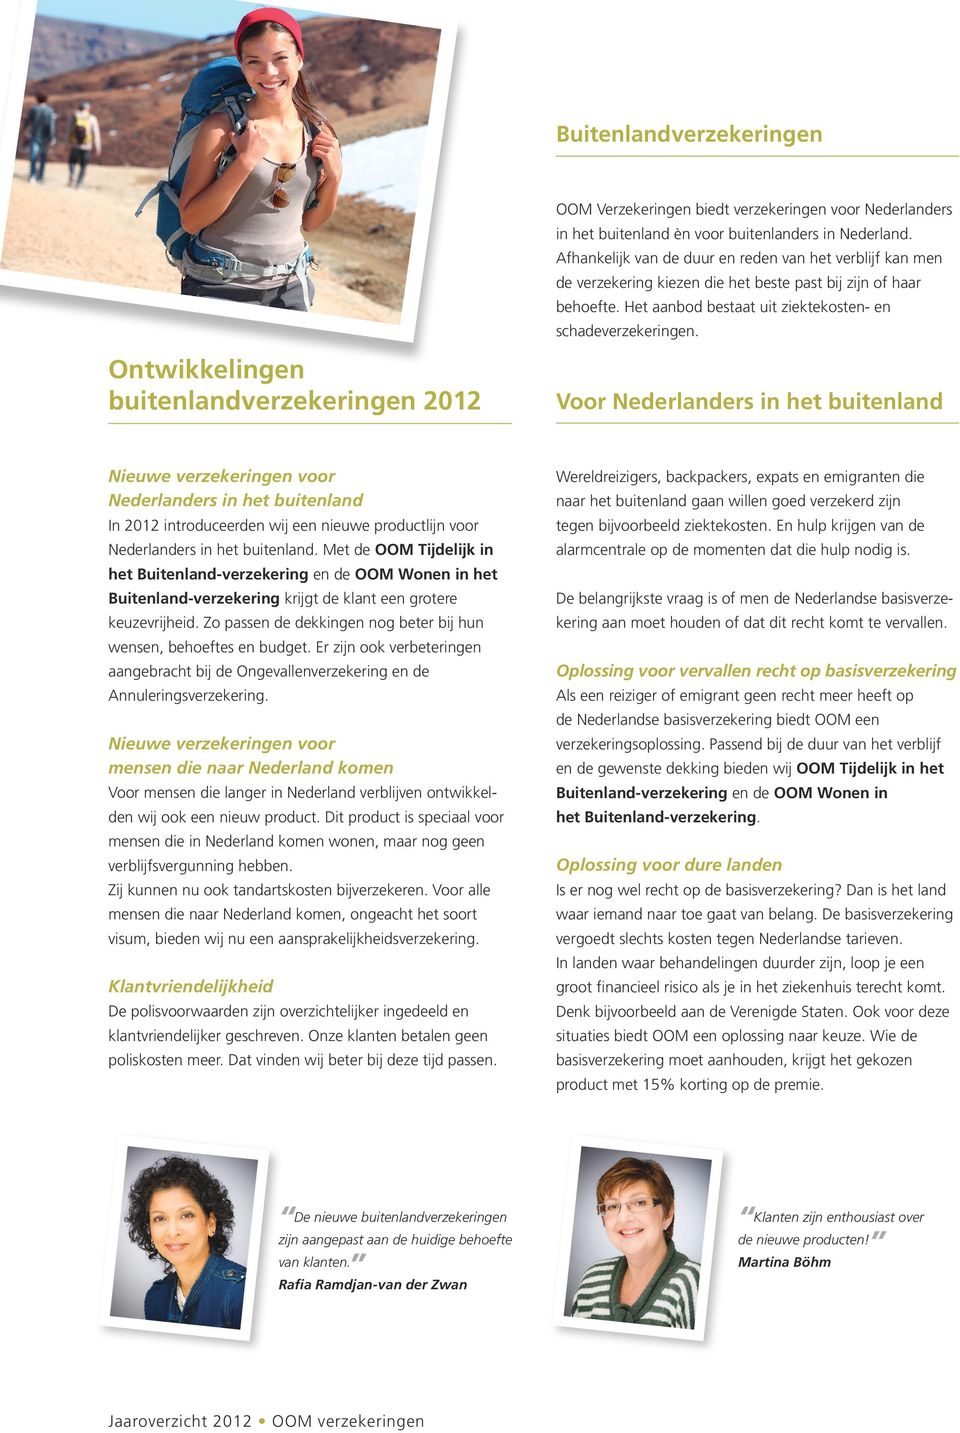 Voor Nederladers i het buitelad Nieuwe verzekerige voor Nederladers i het buitelad I 2012 itroduceerde wij ee ieuwe productlij voor Nederladers i het buitelad.